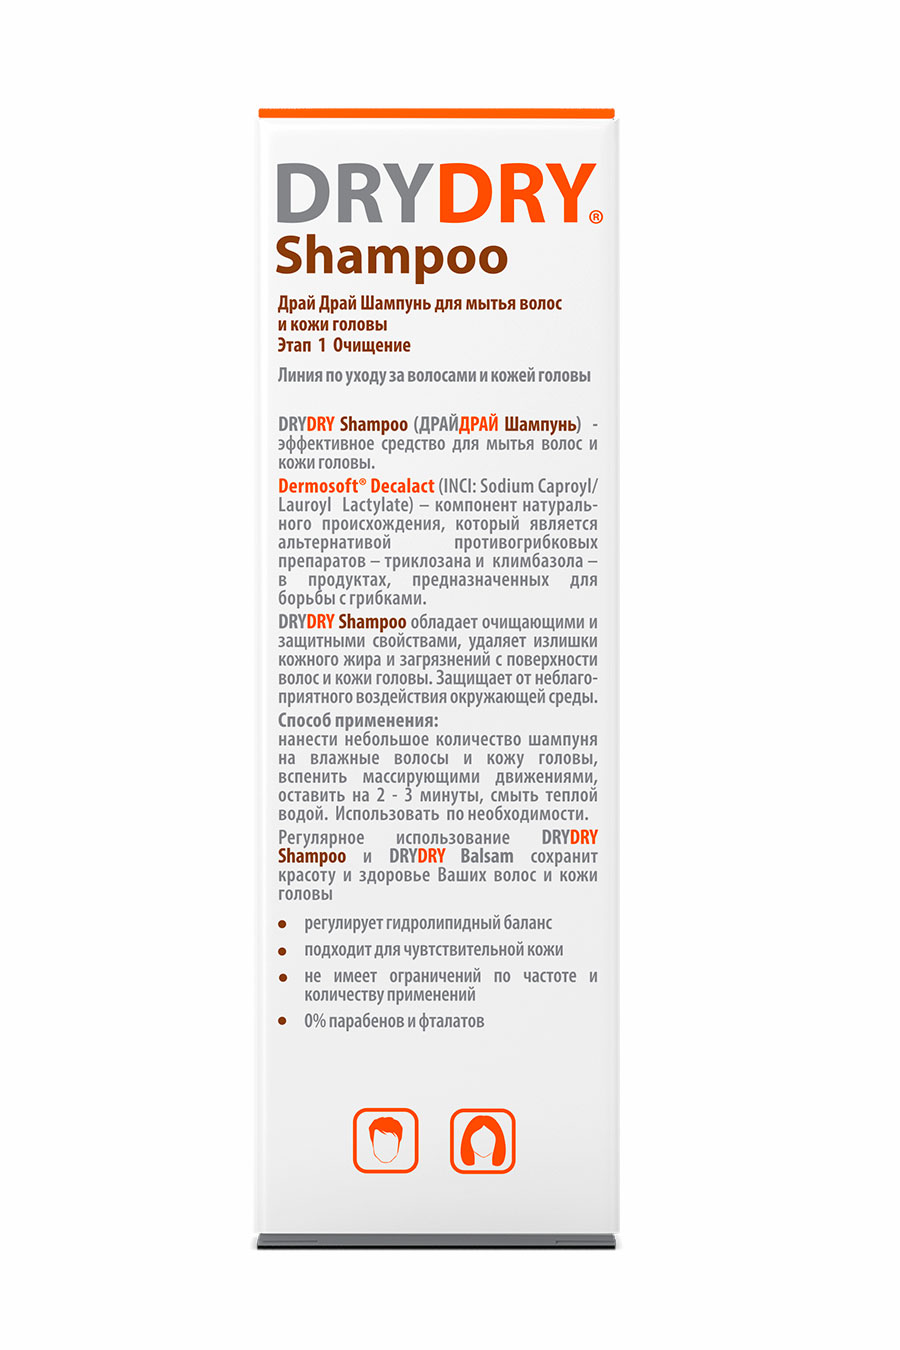 Dry dry shampoo отзывы